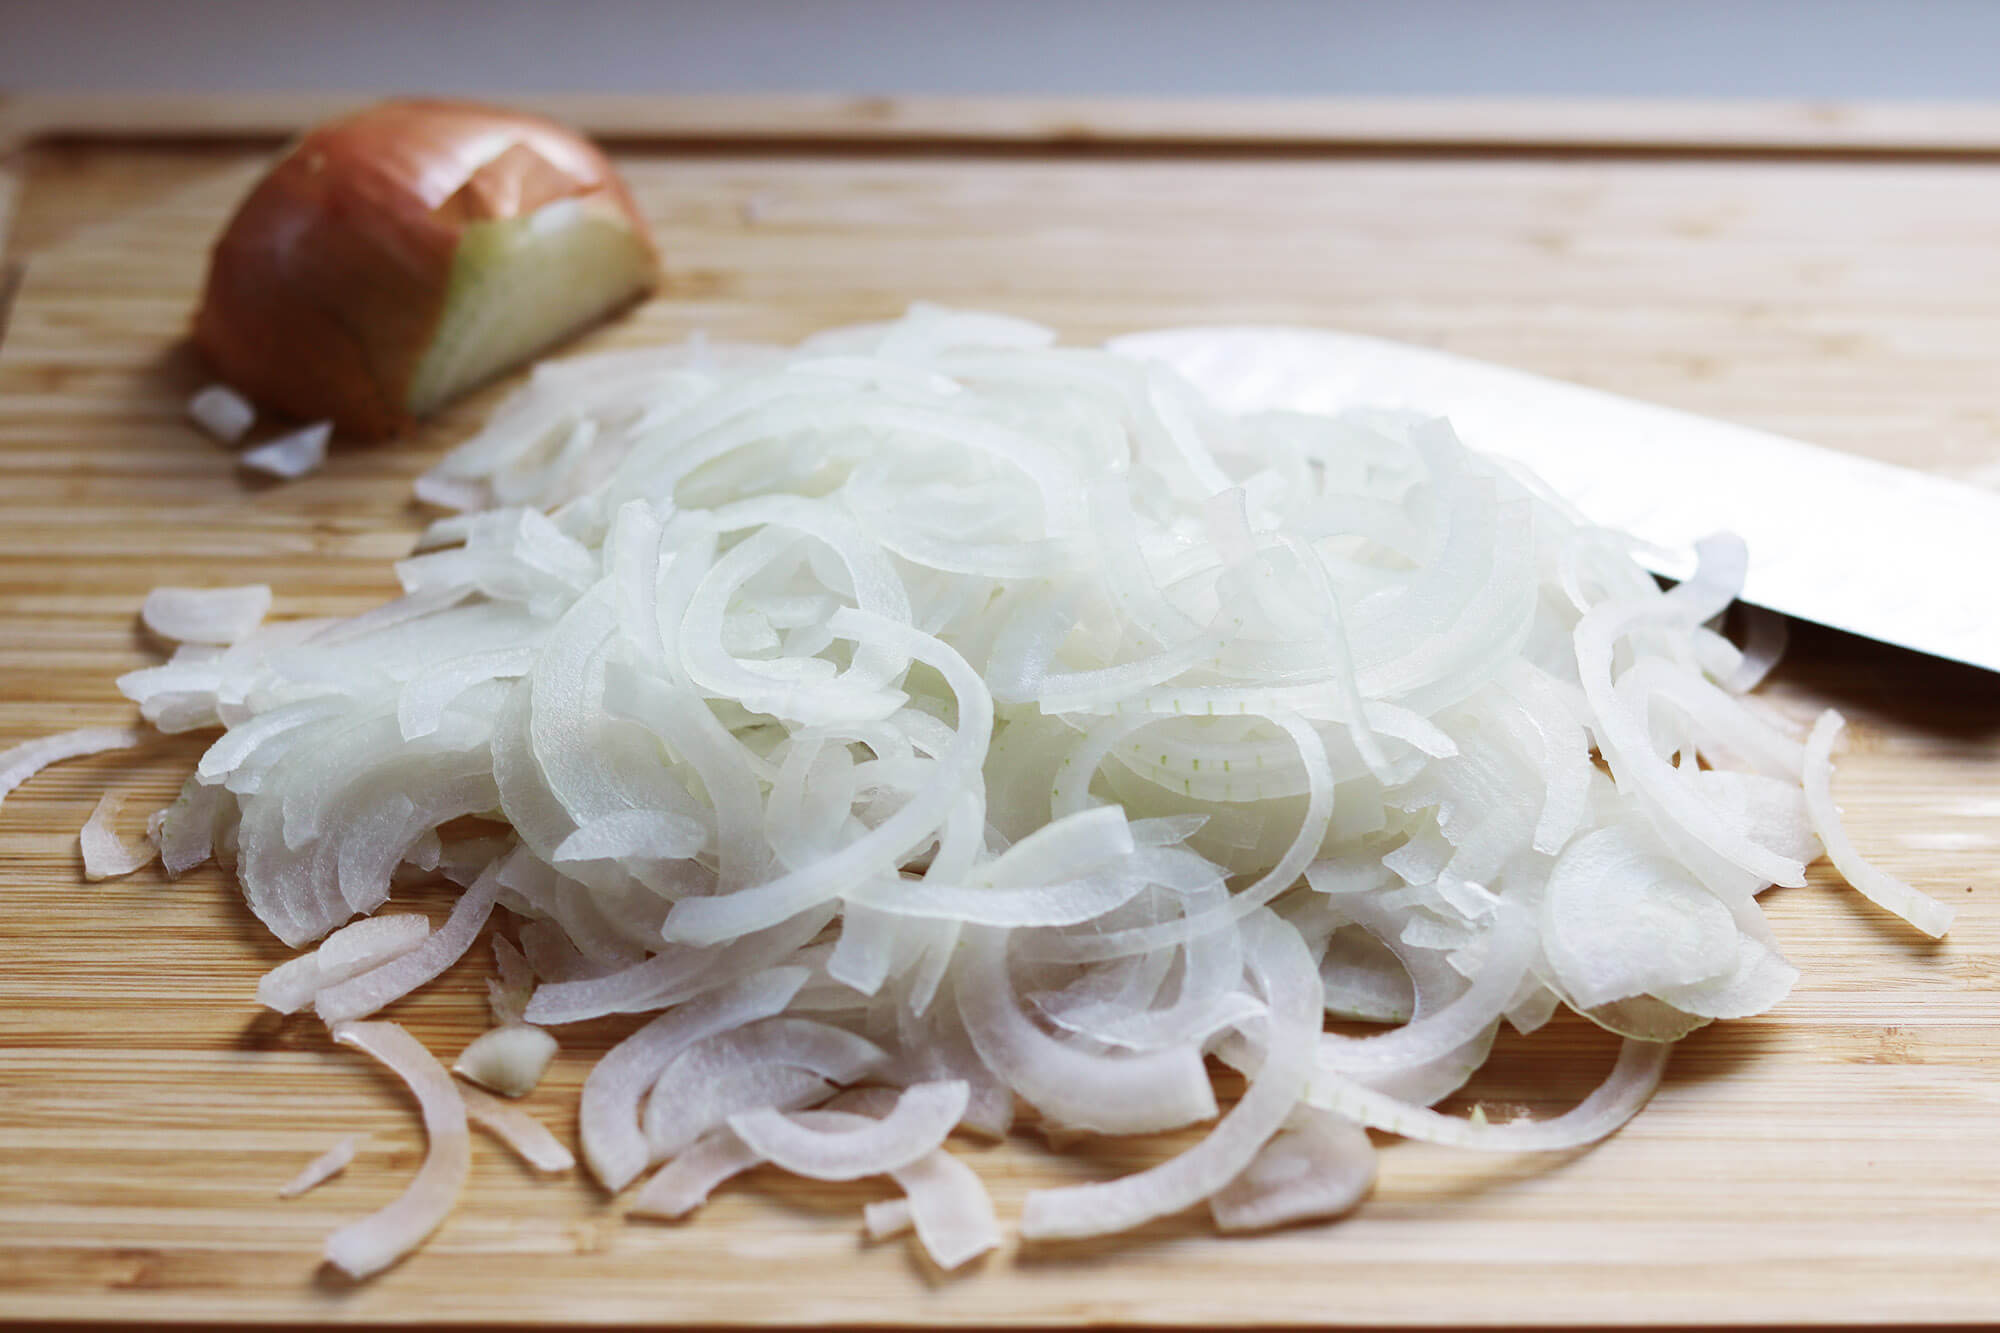 Korean onion salad, recipe from Sonamu Dubai